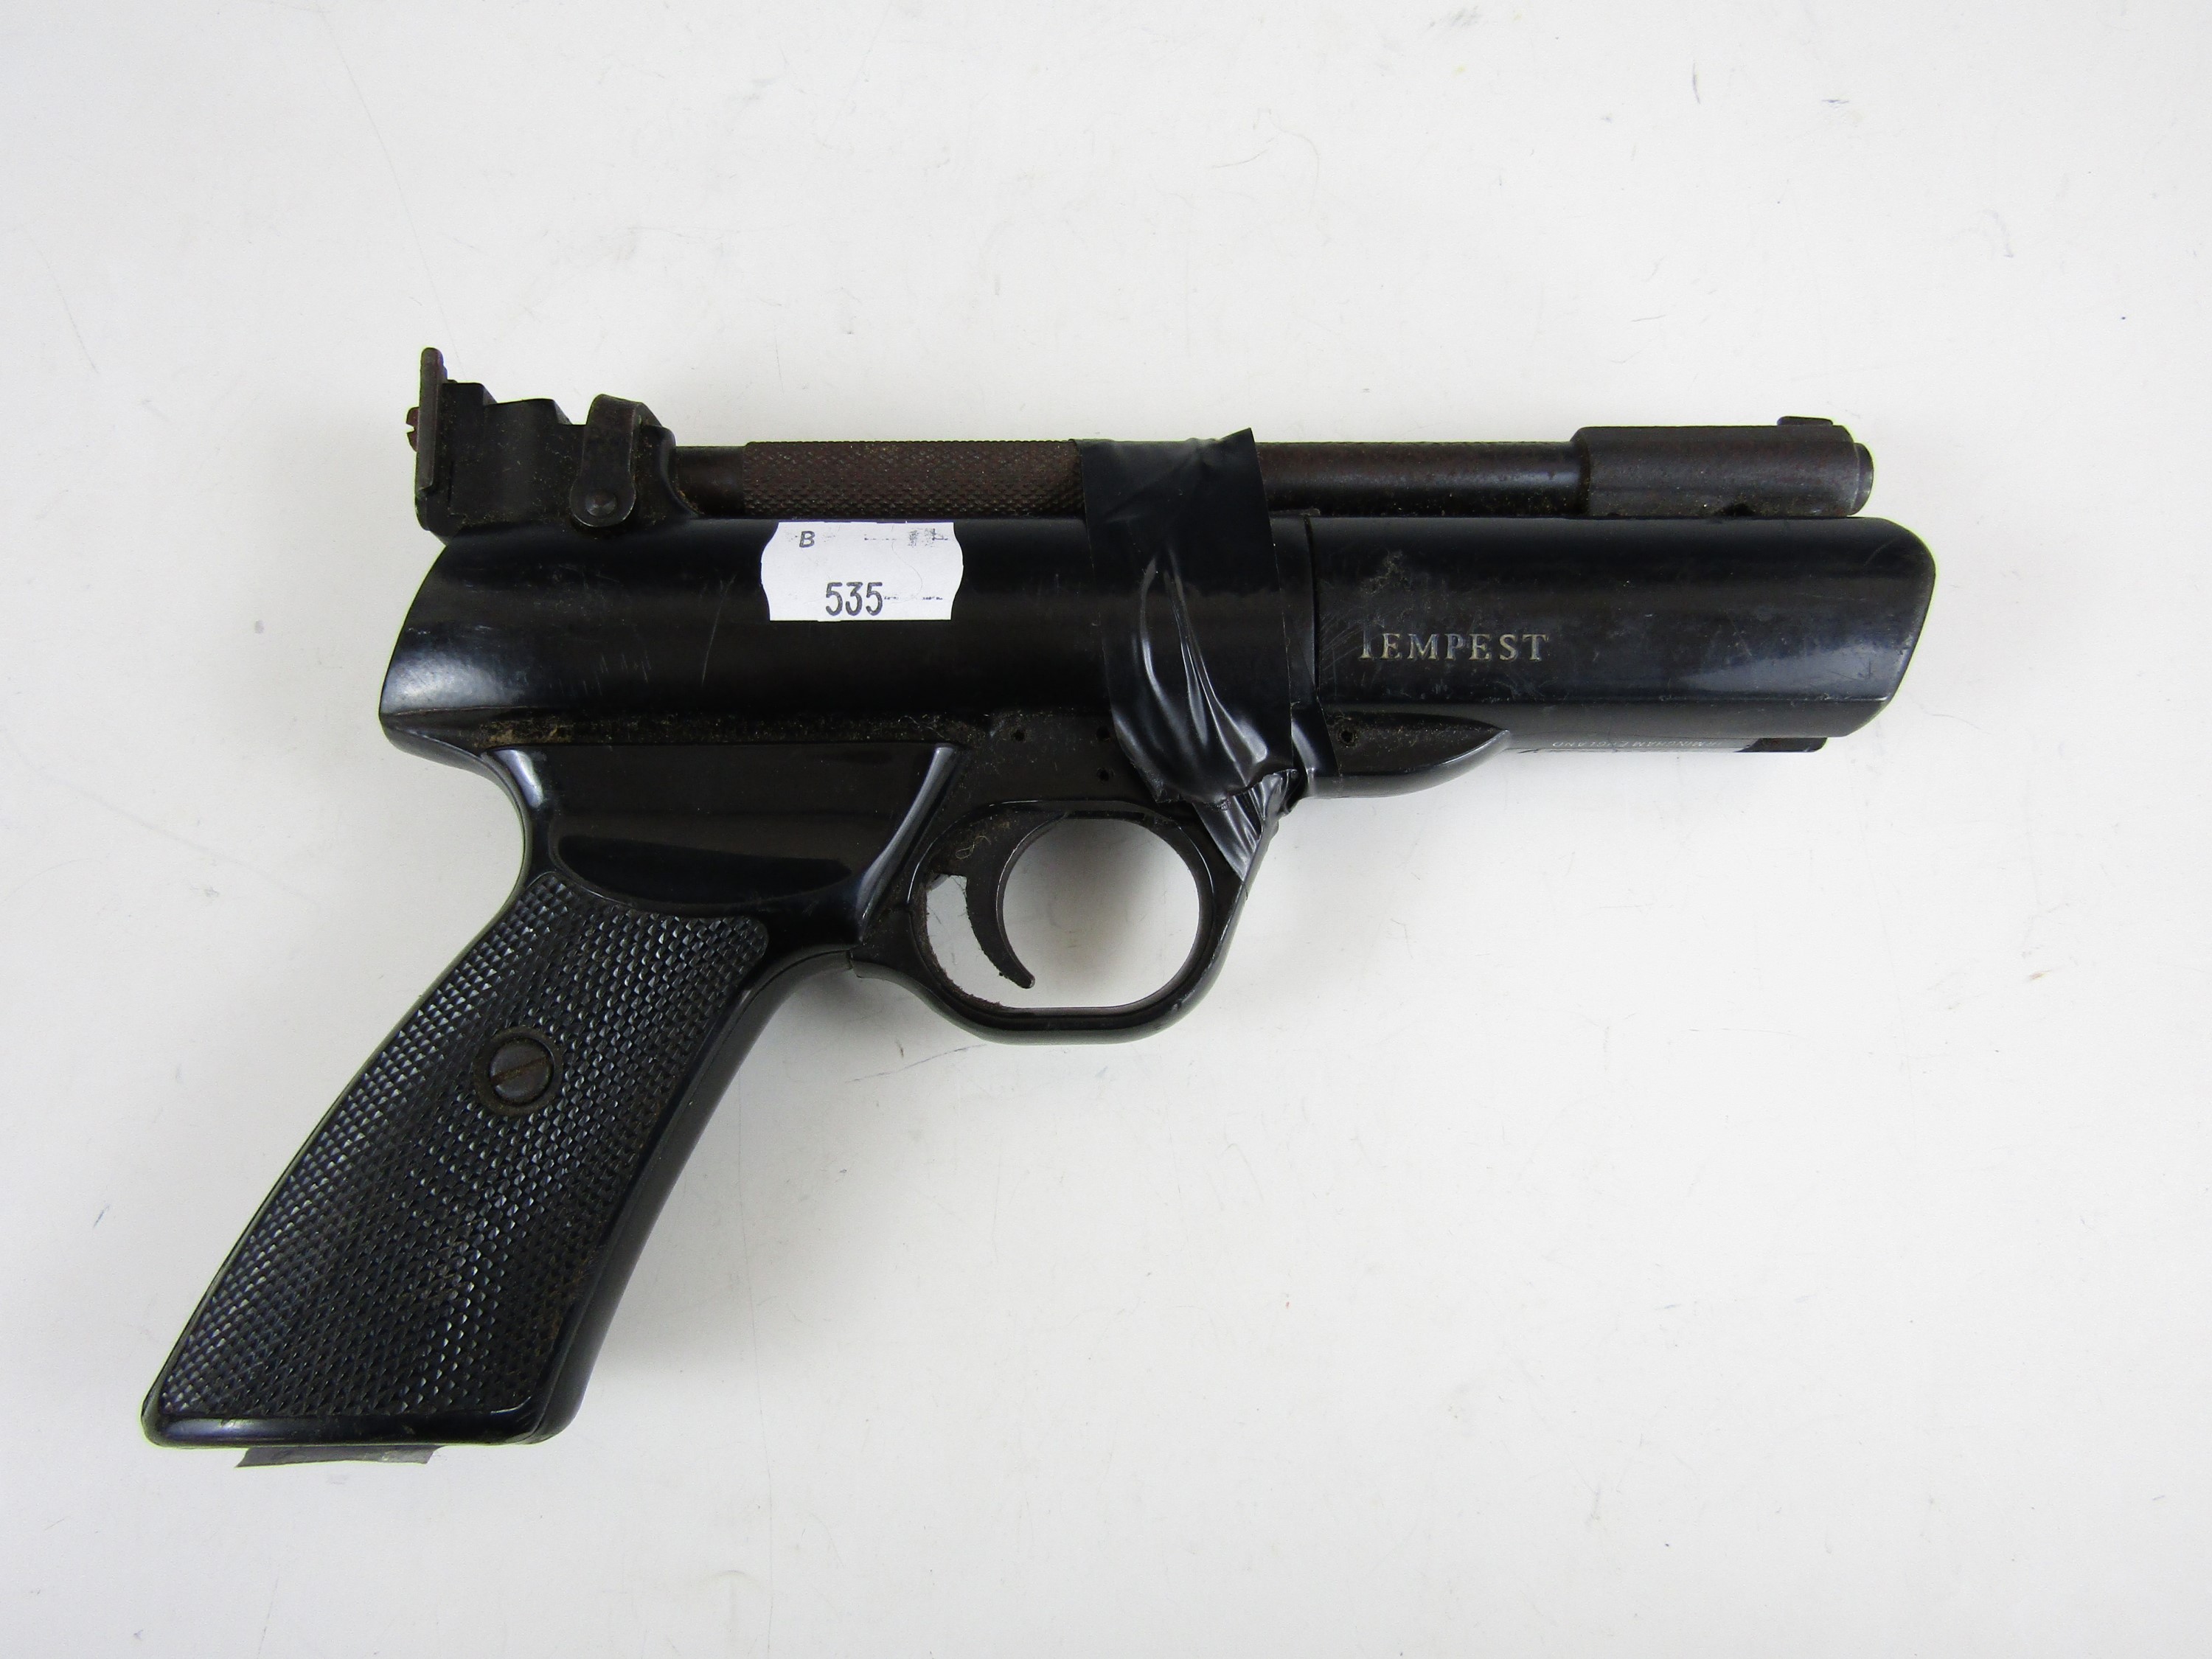 A Webley & Scott Tempest .22 calibre air pistol - Image 2 of 2